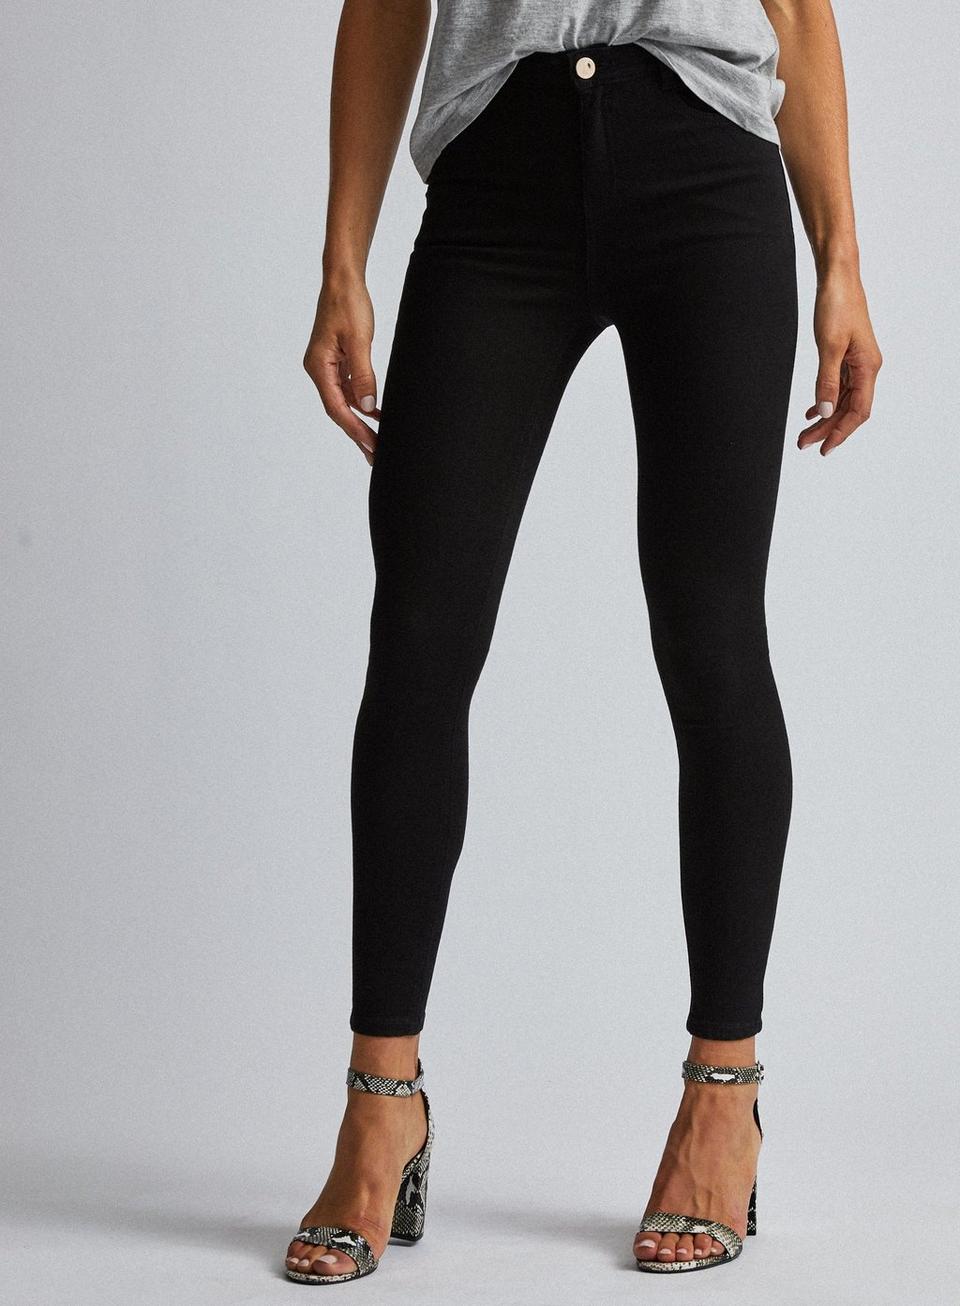 Jeans | Black Short Shape and Lift Denim Jeans | Dorothy Perkins